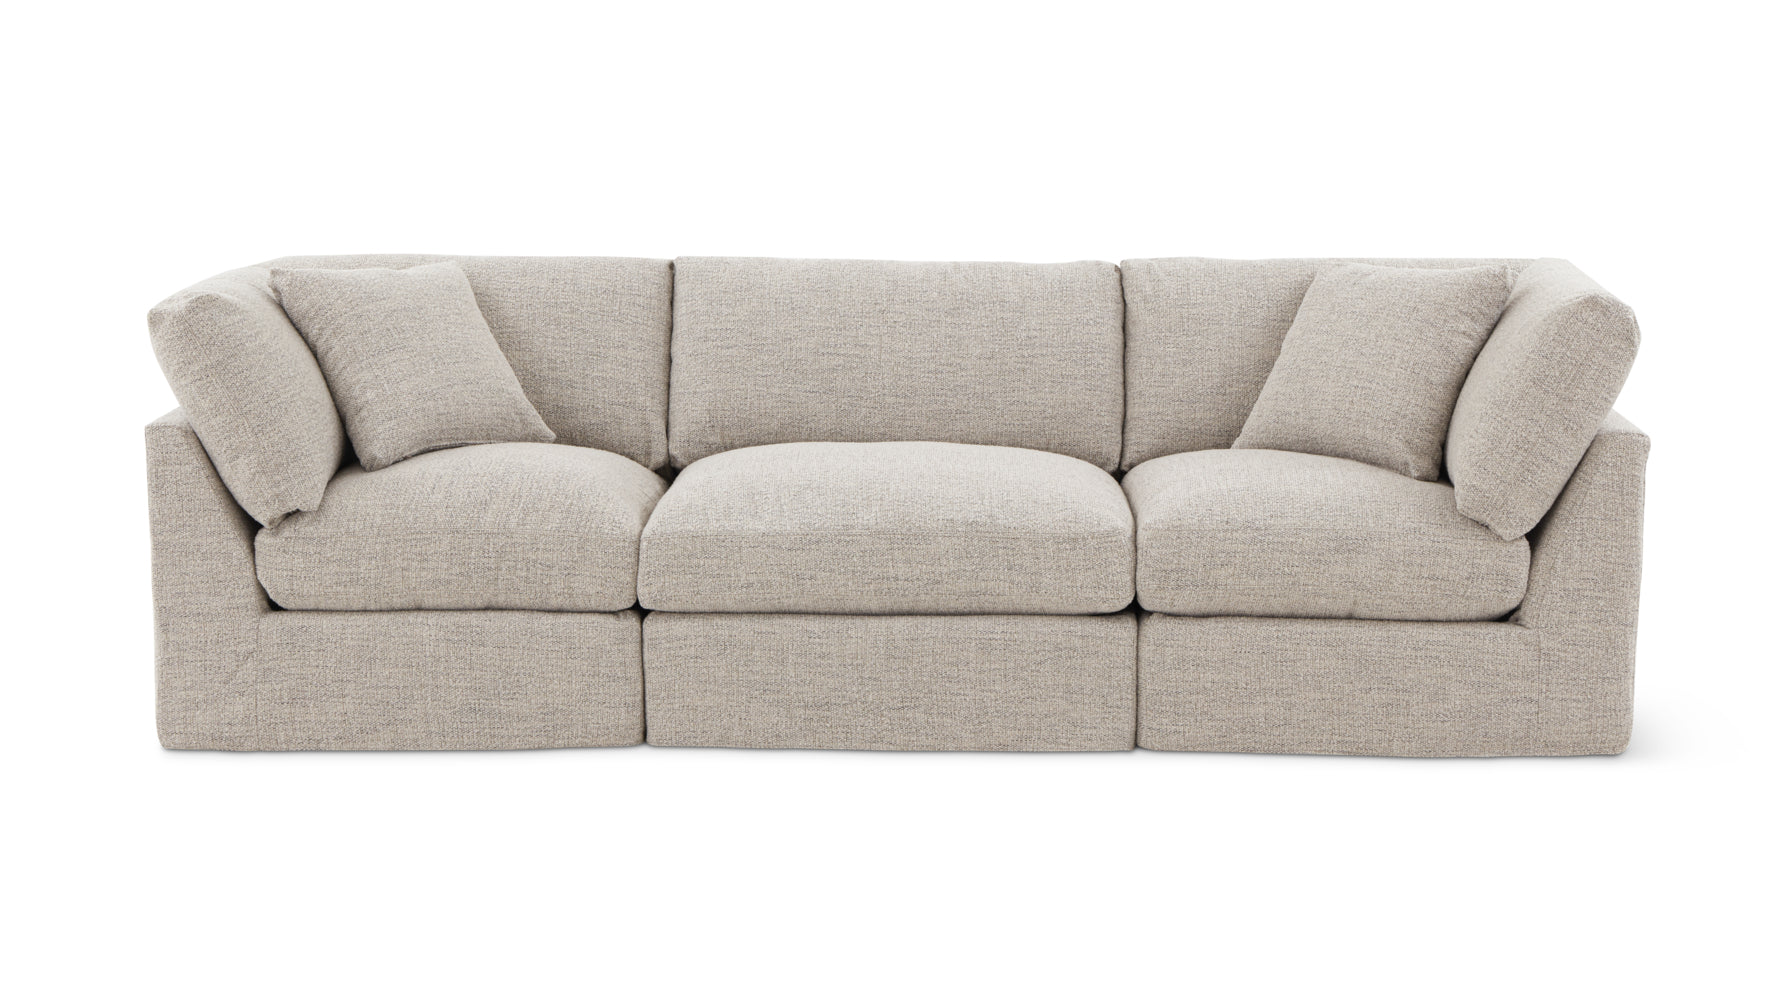 Get Together™ 3-Piece Modular Sofa, Standard, Oatmeal - Image 1